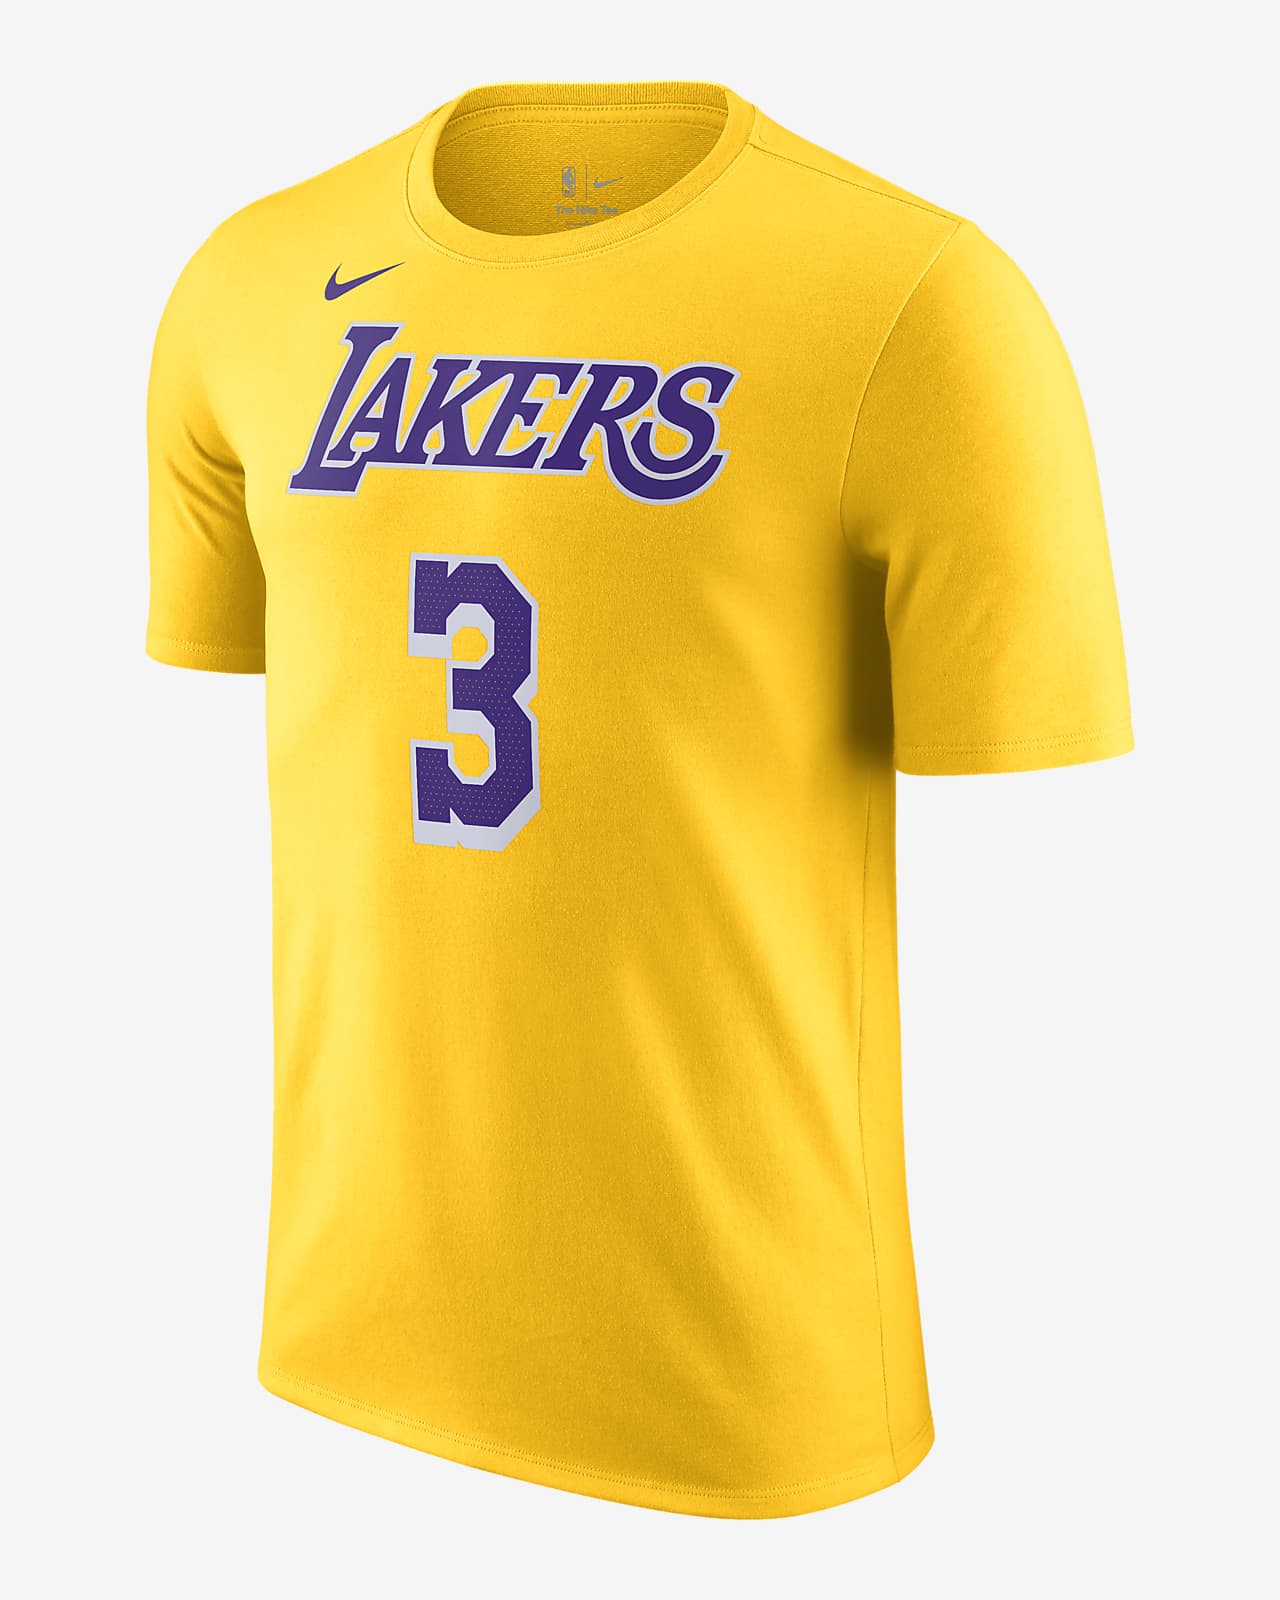 Playera Nike NBA Los Angeles Lakers para Nike.com